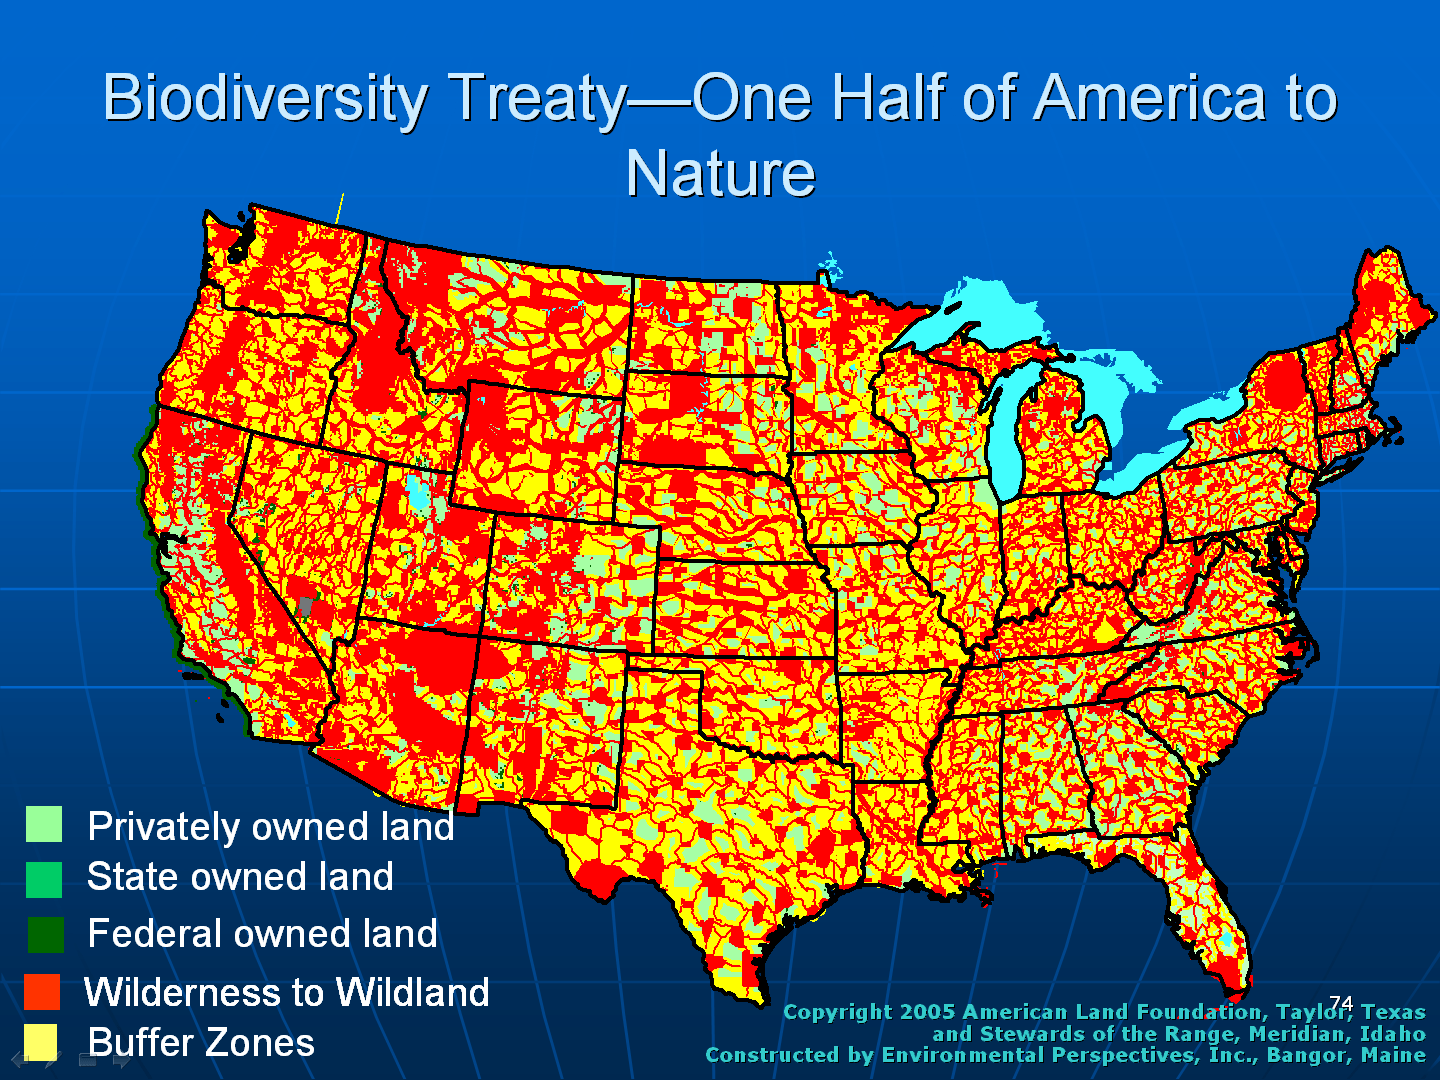 a-biodiversity-treaty